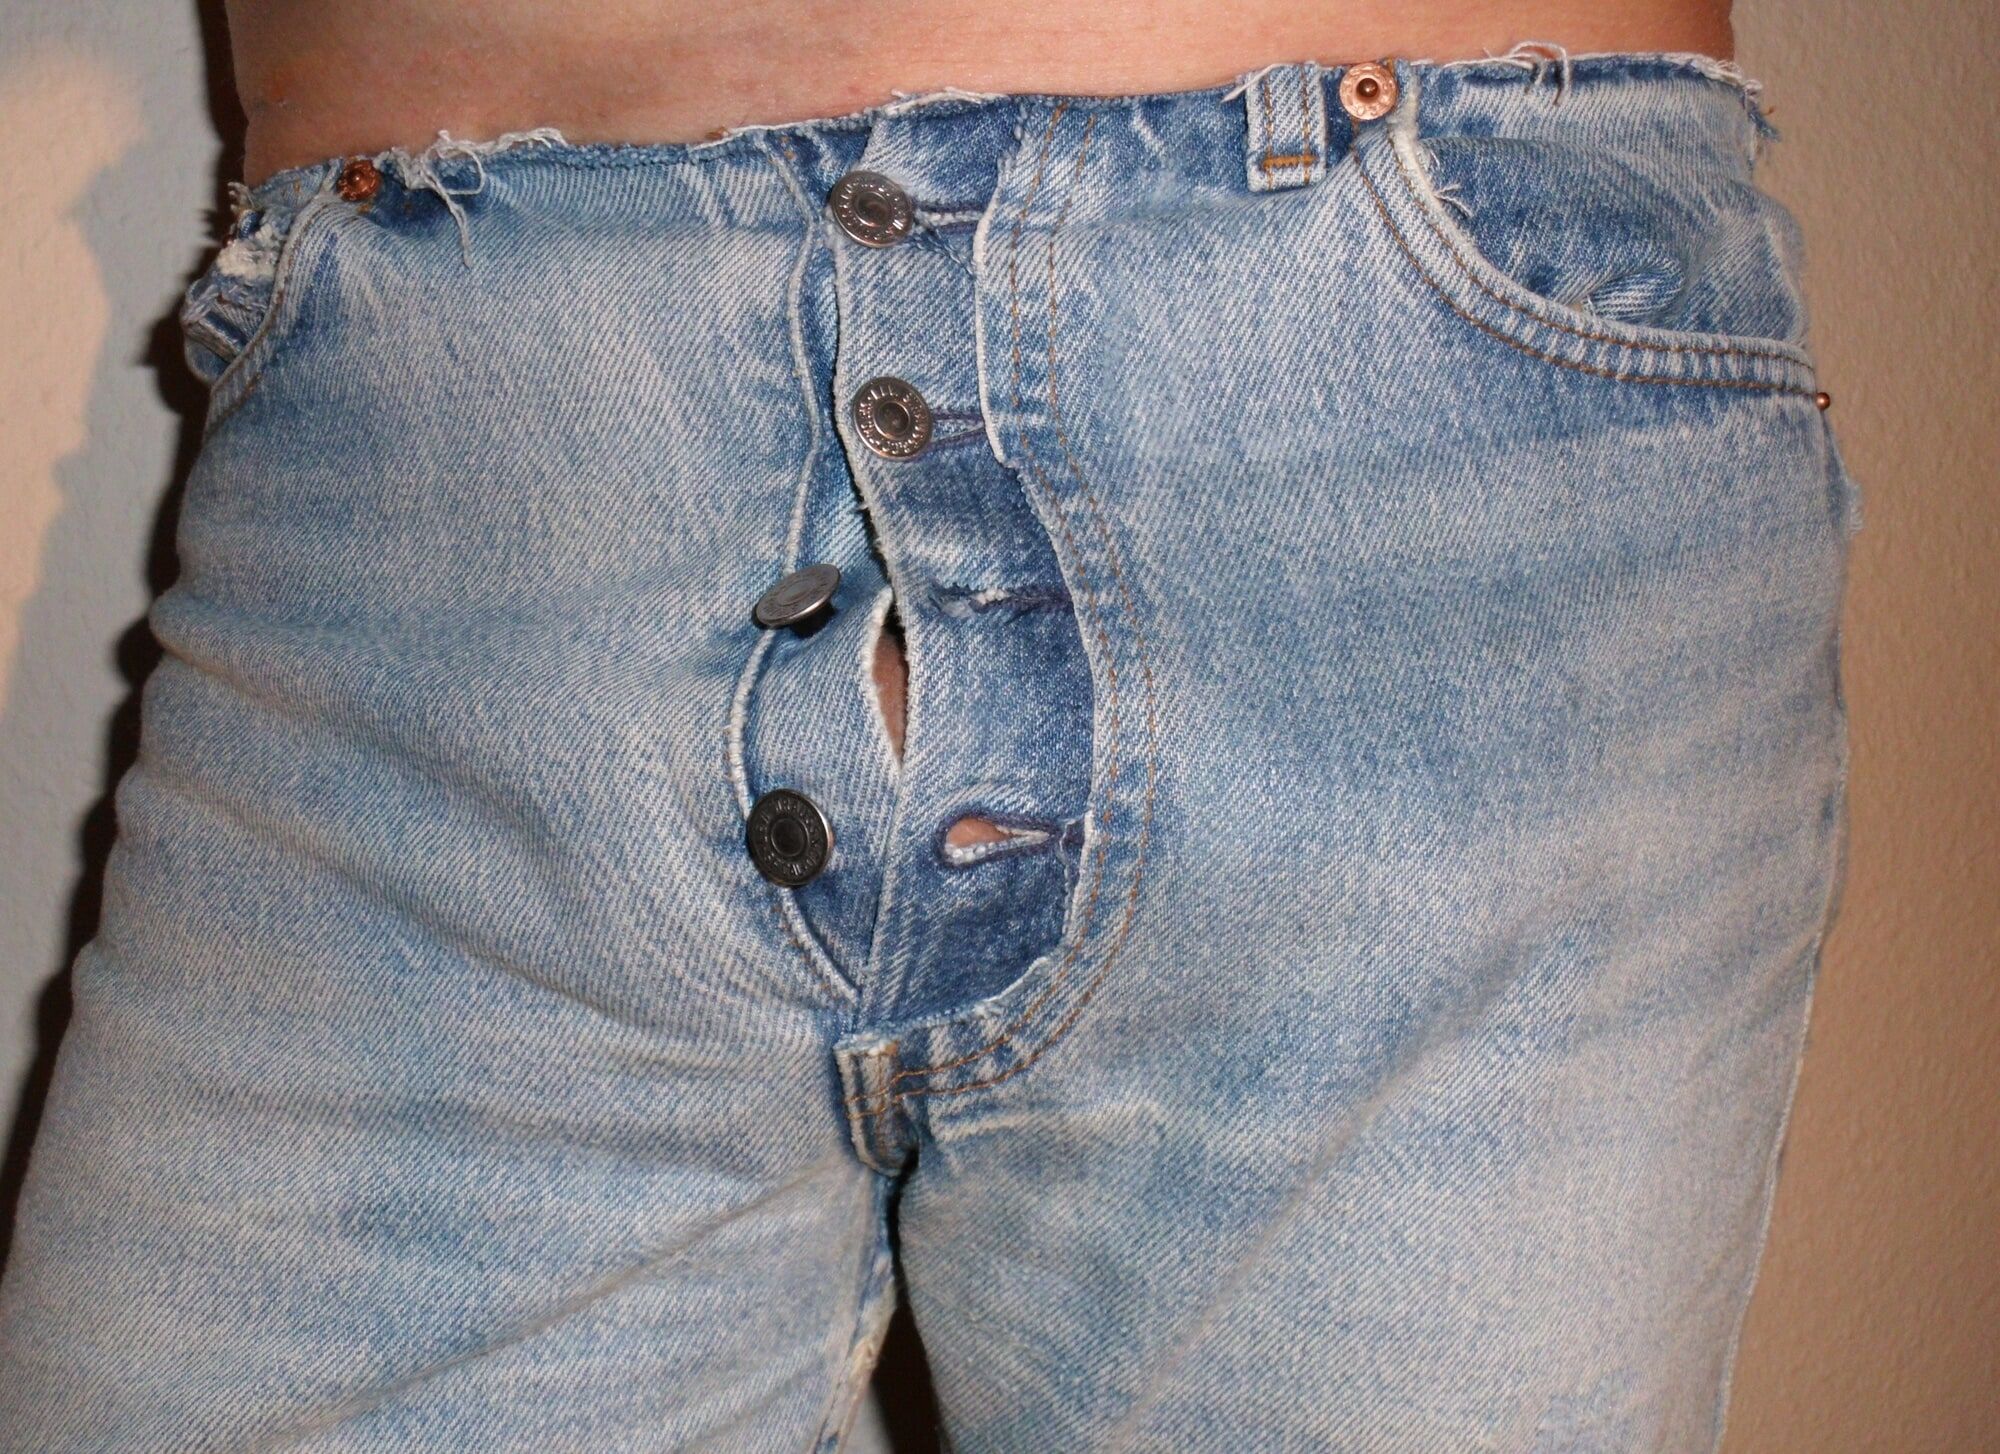 Open Jeans Bulge